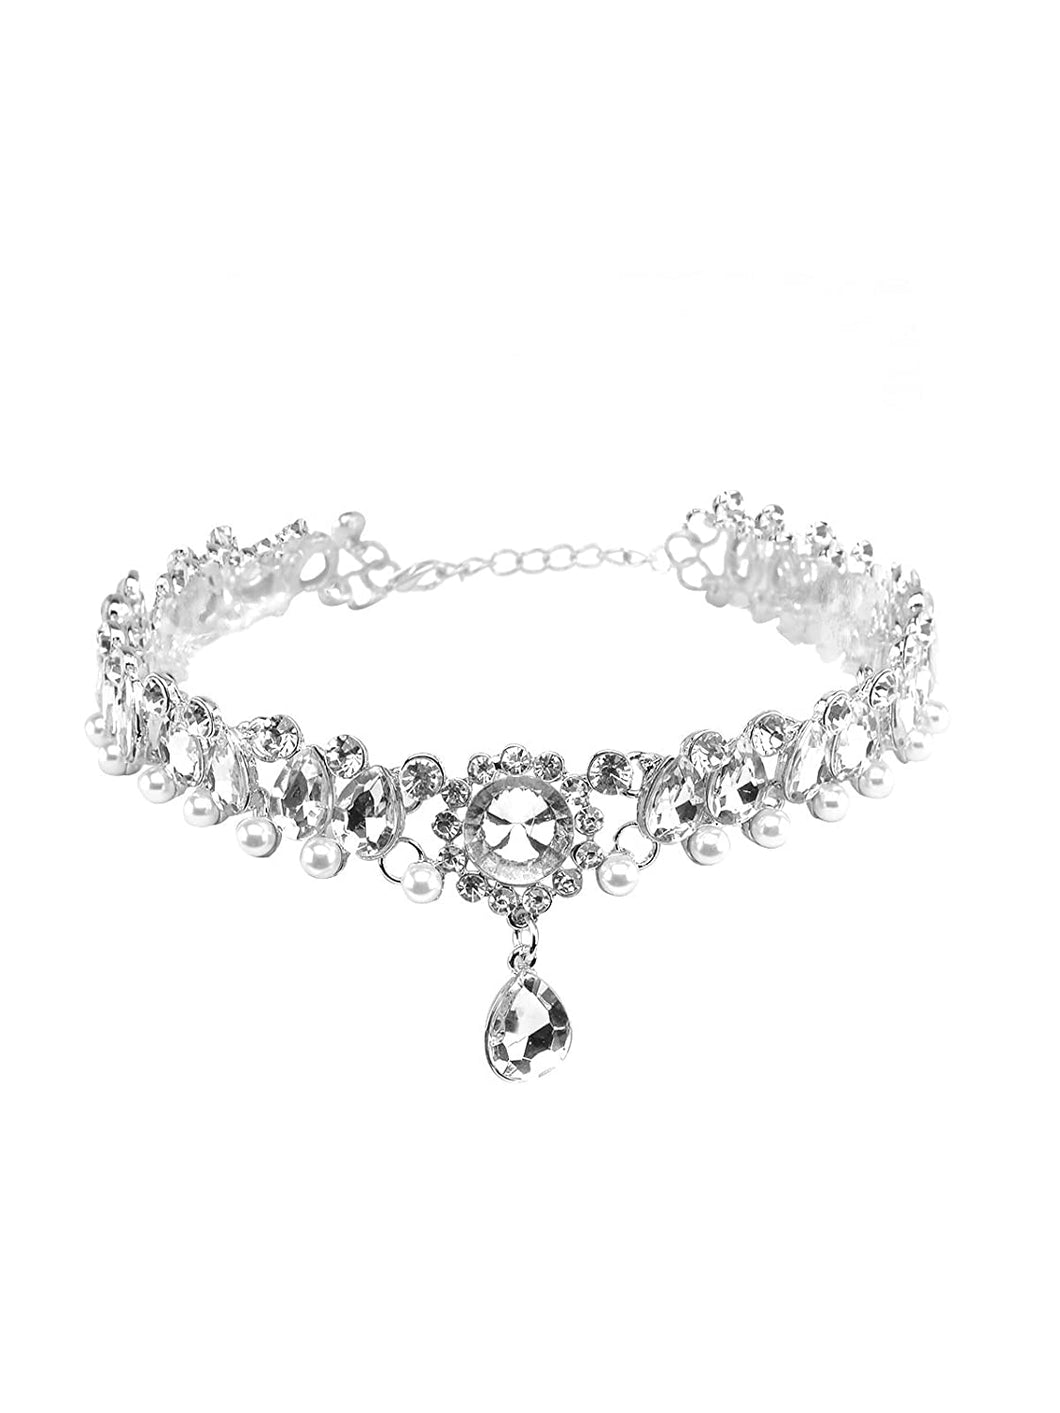 Bride Crystal Pendant Silver Choker Necklace